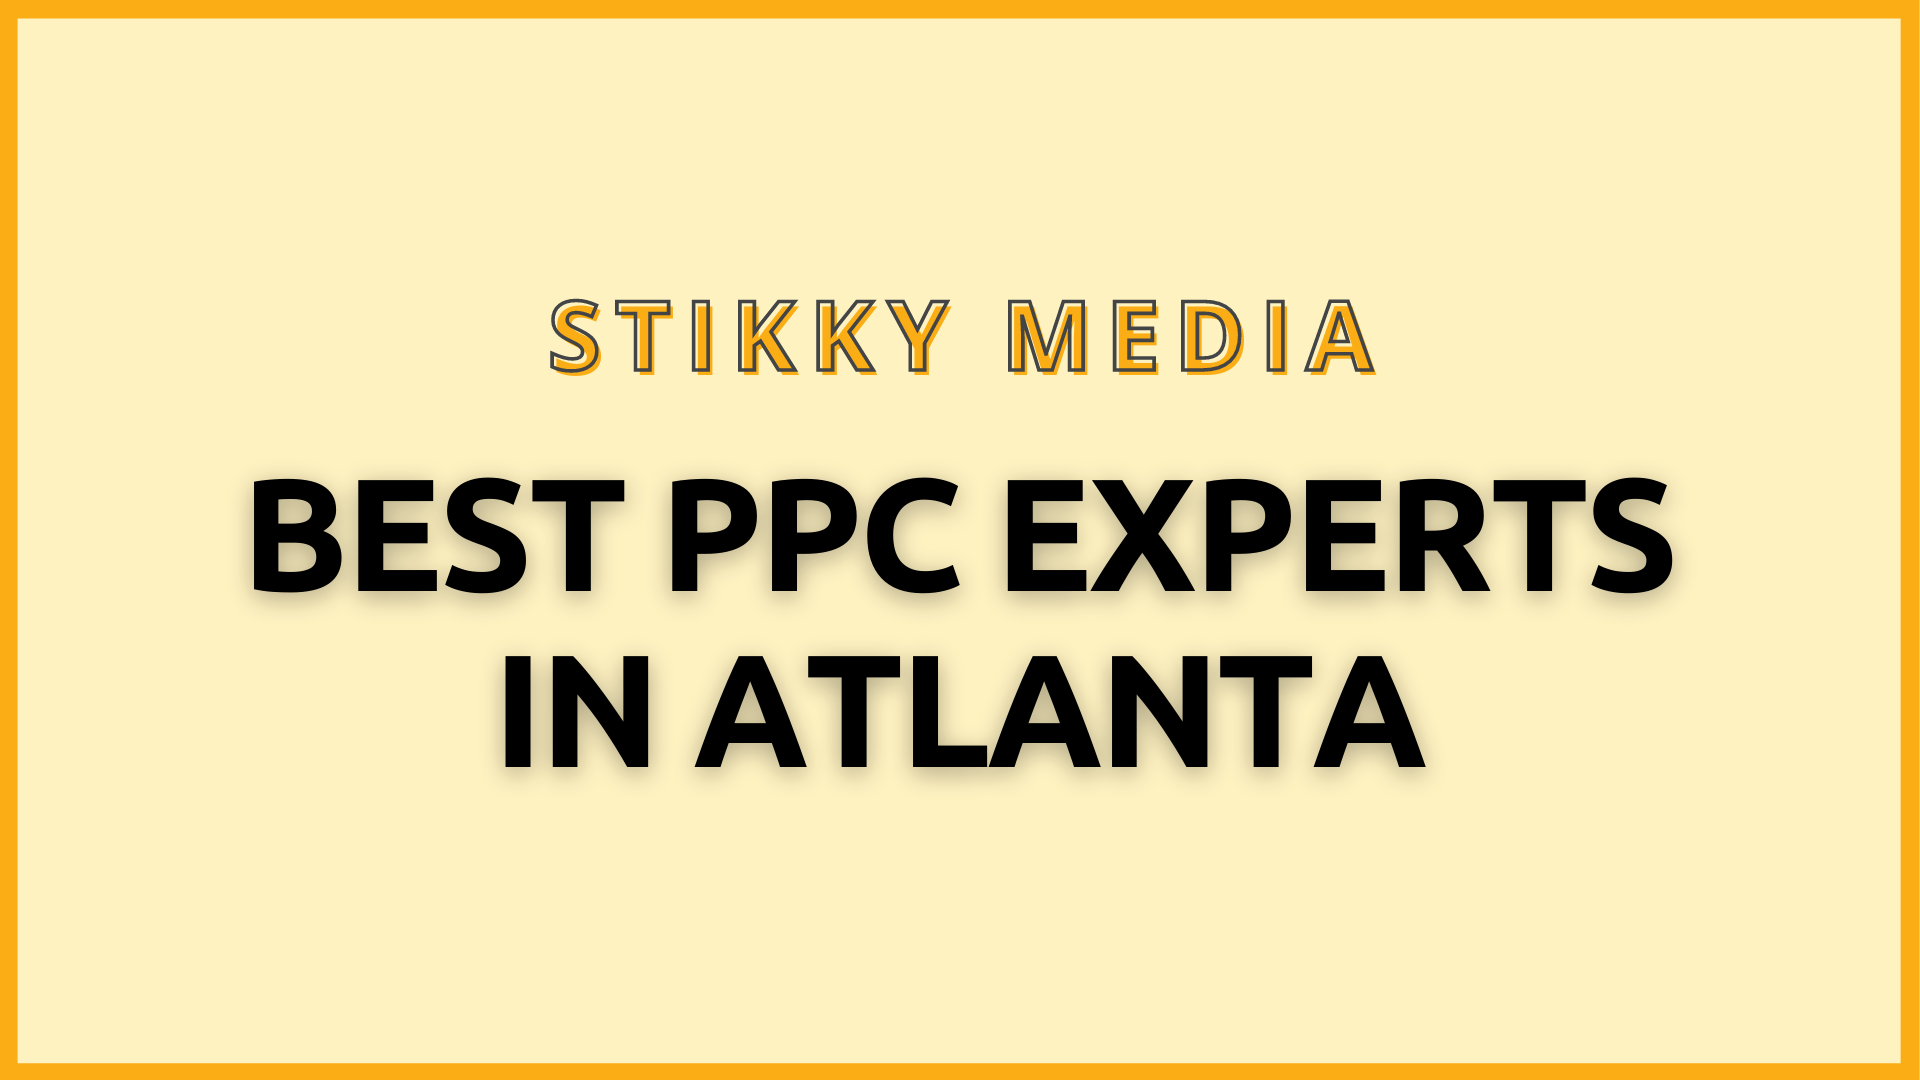 PPC services in Atlanta - Stikky Media